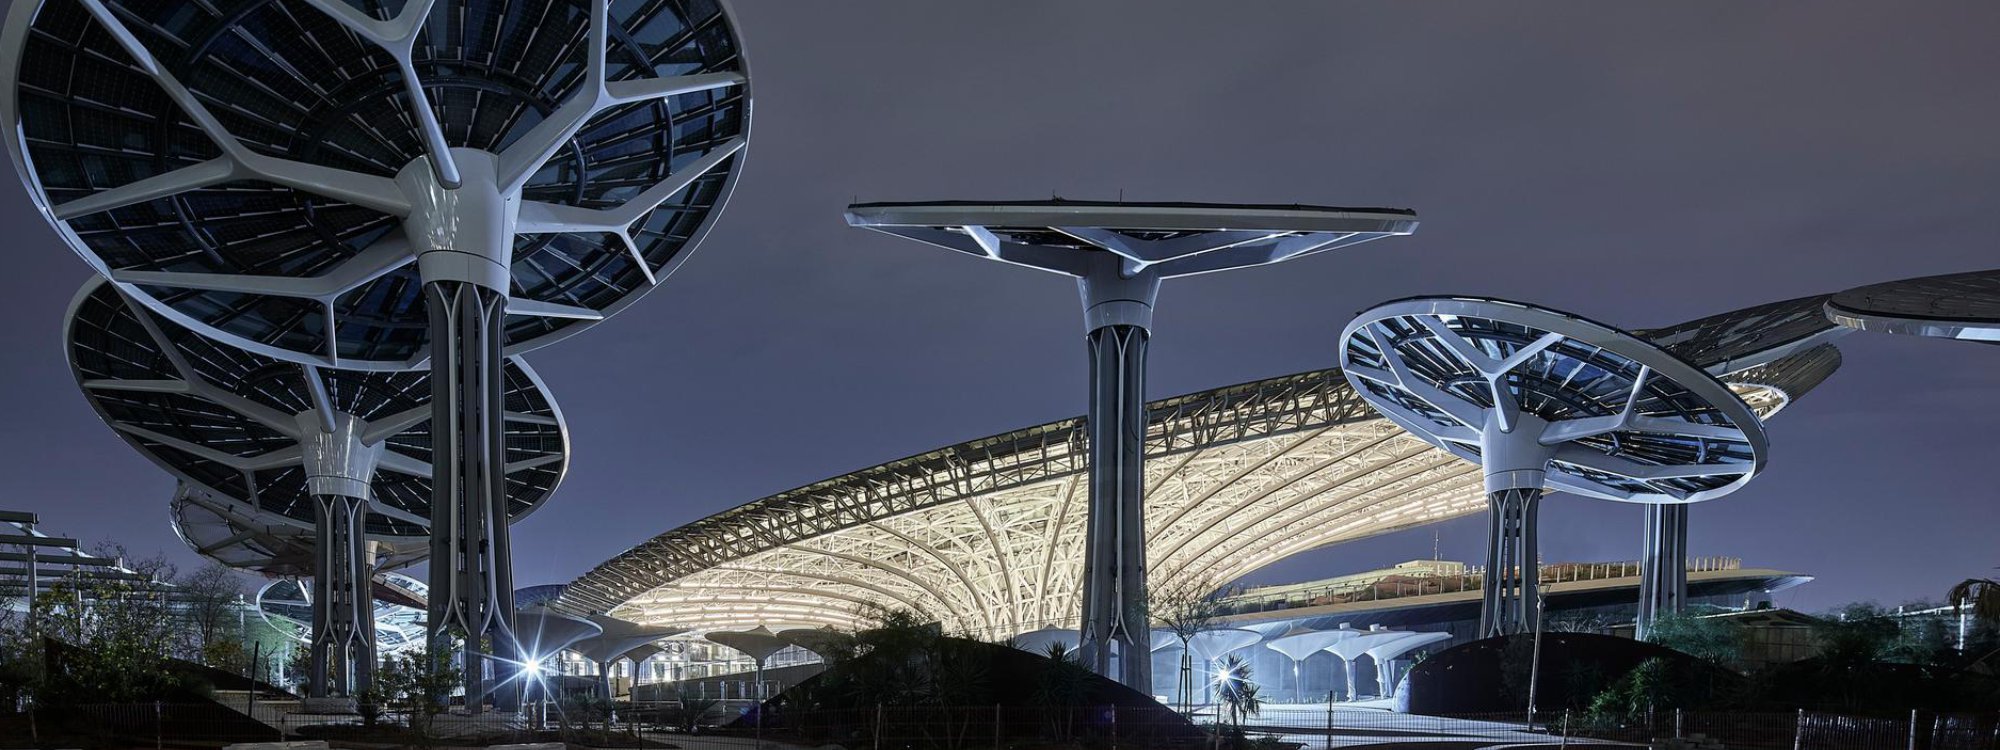 Sustainability Pavilion Dubai 2020 Expo